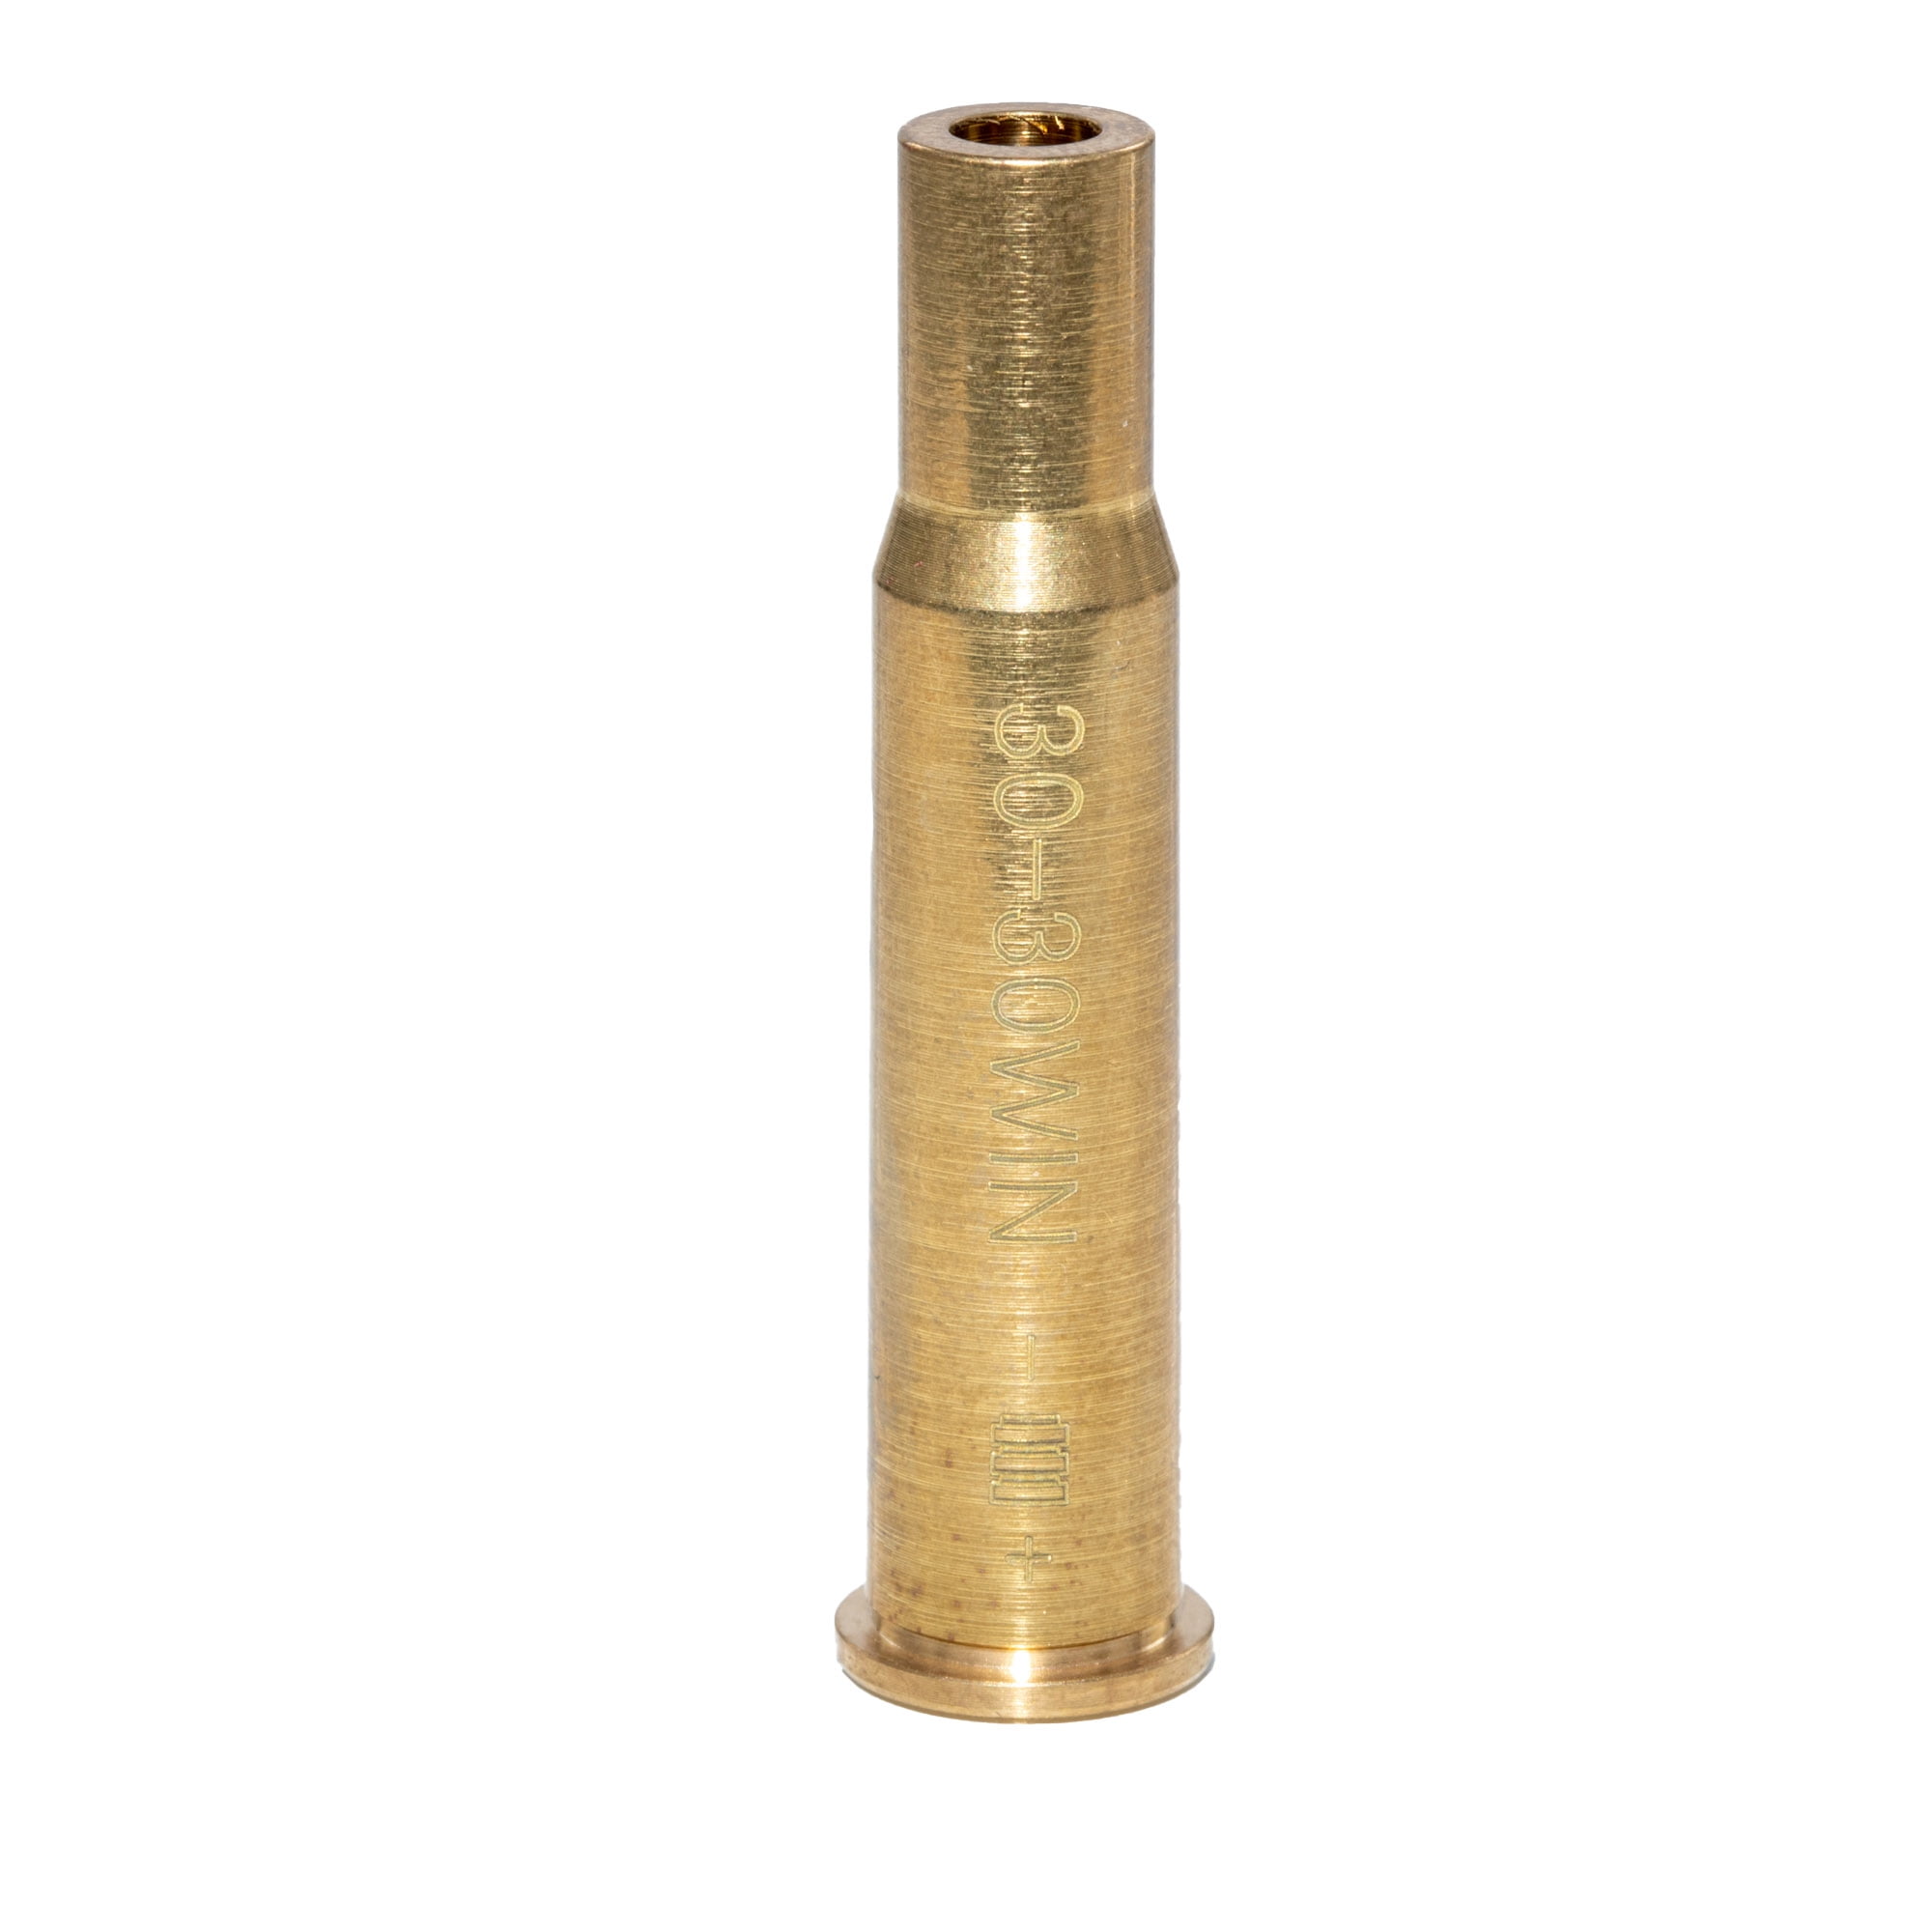 CCOP USA .223 Remington Cartridge Laser Bore Sight Laser LBS-223 